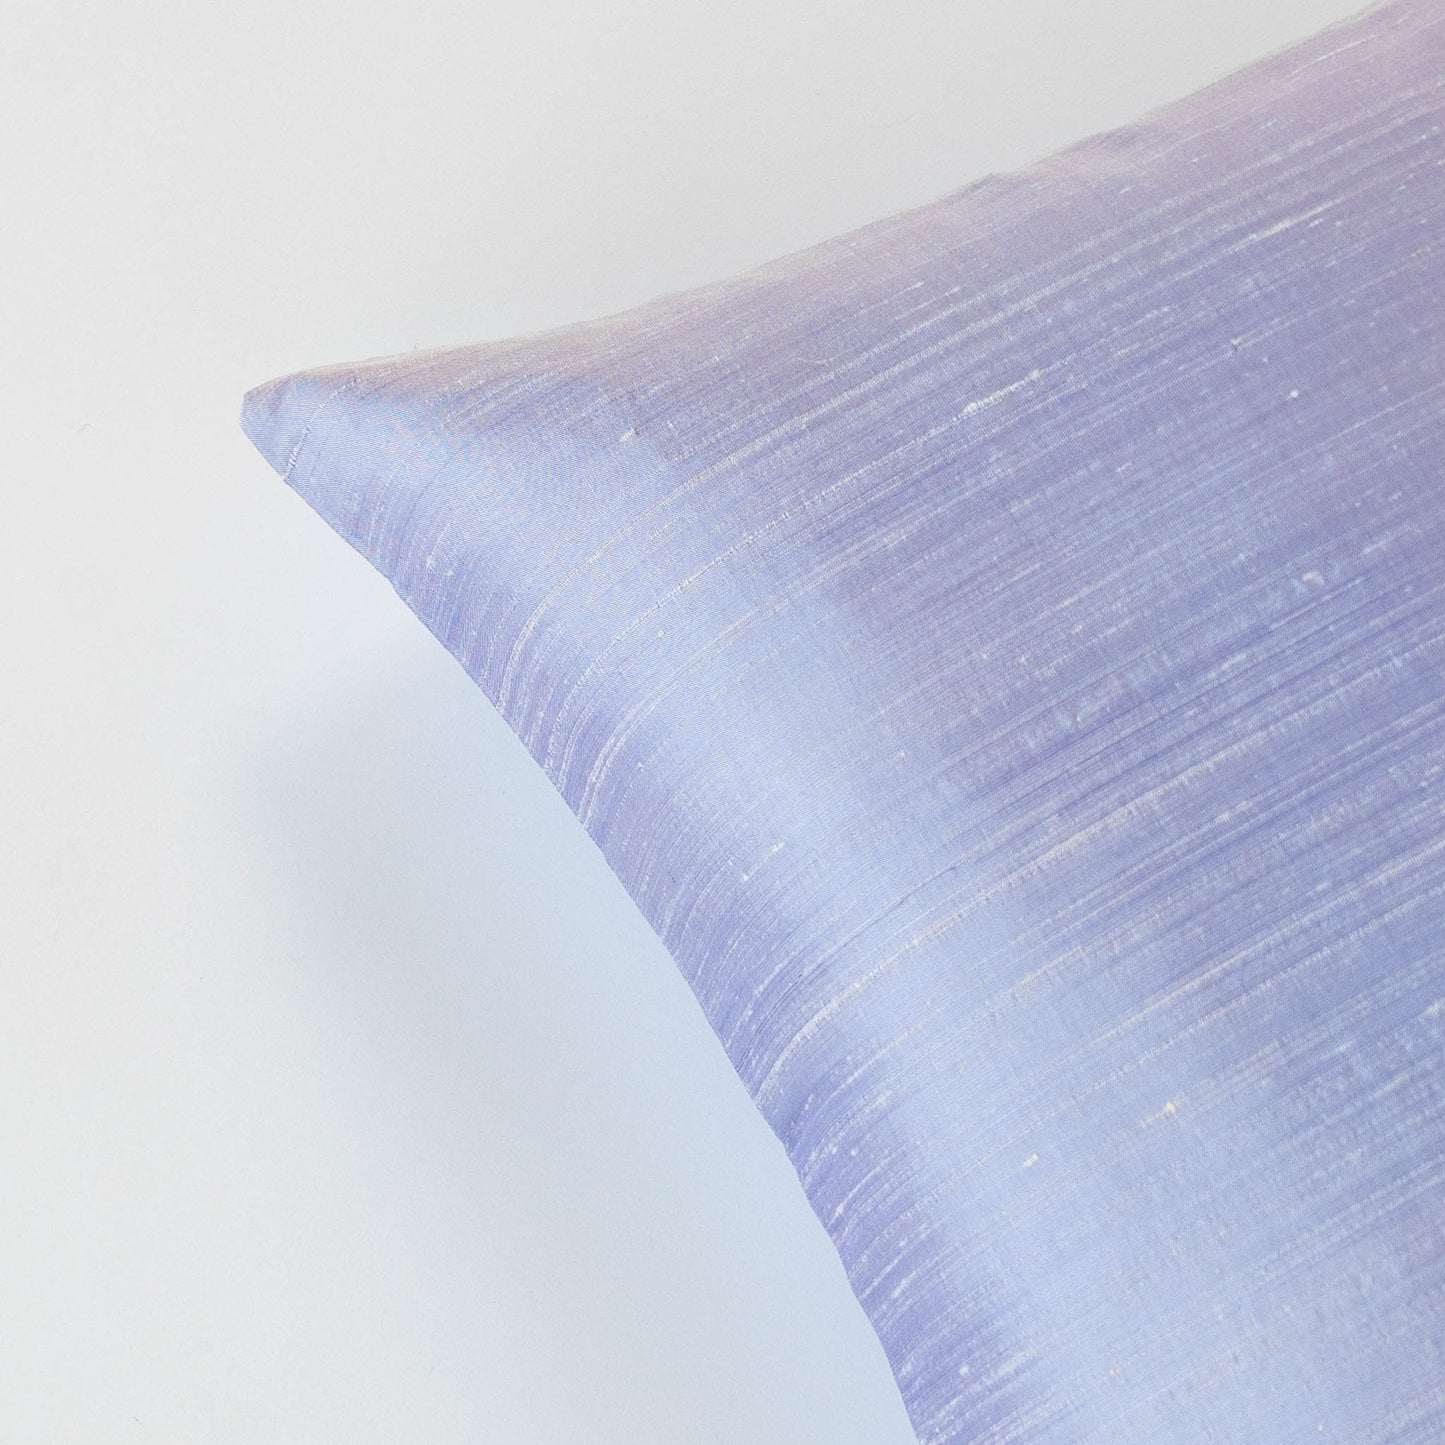 Dupioni Silk Throw Pillow Cover | Iris